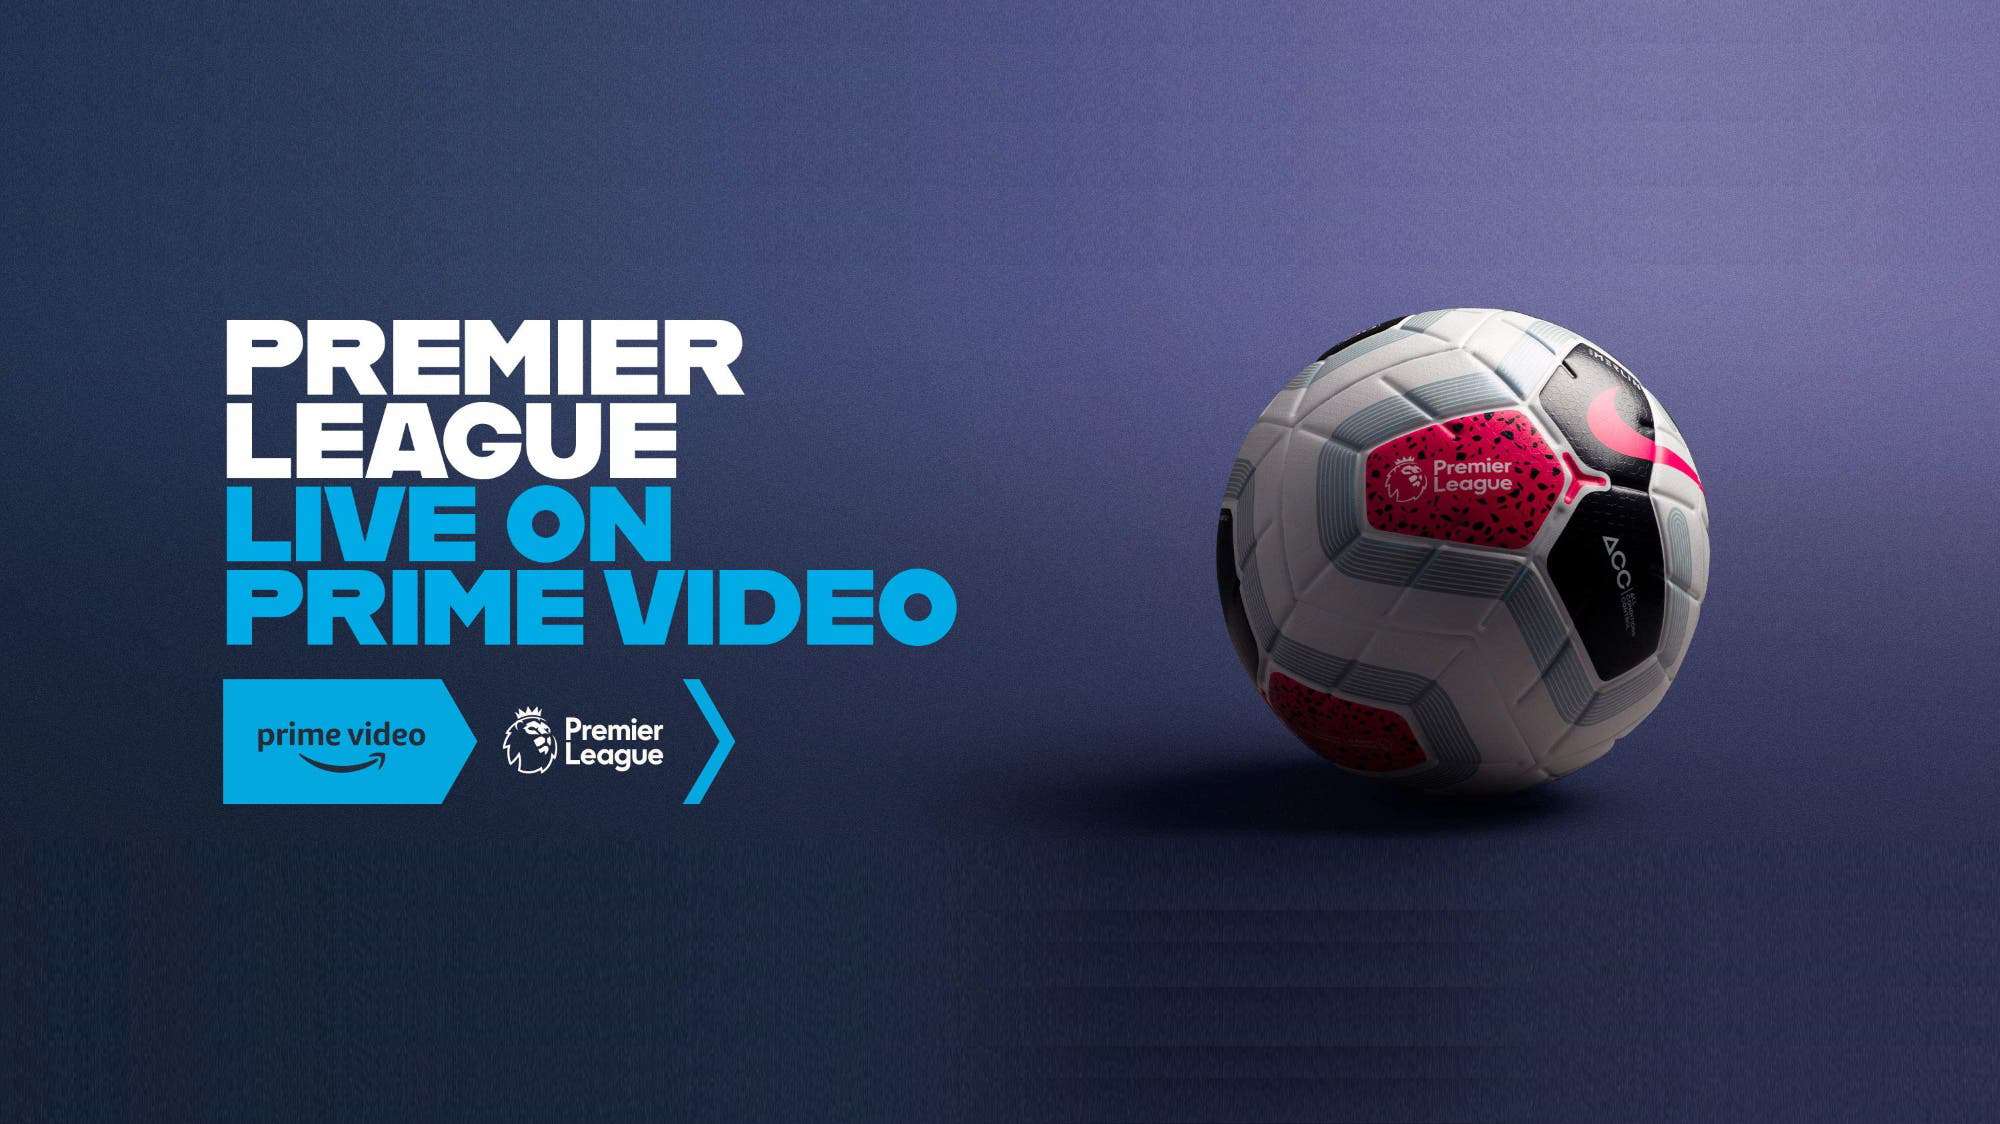 Amazon Prime Video to live stream Premier League for free in UK - Gizchina.com